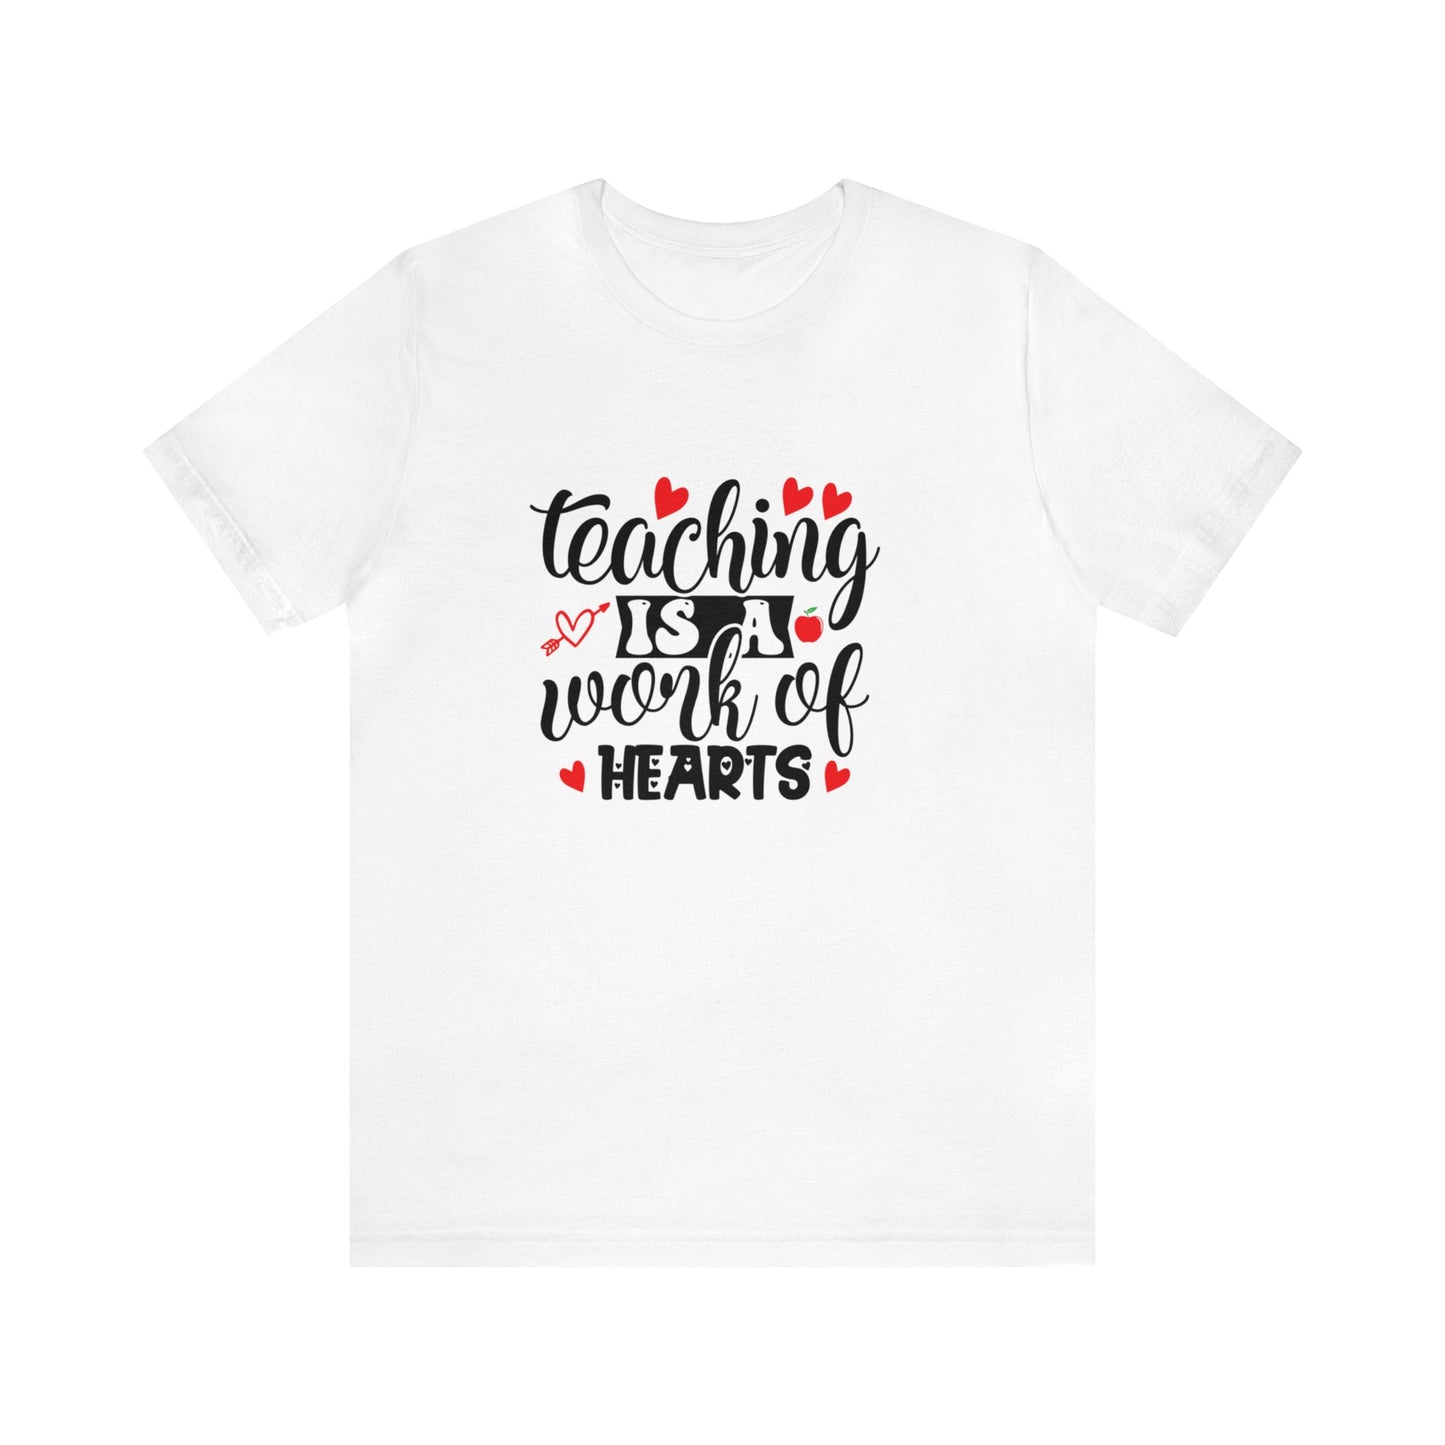 "Empower Educators: Teaching is a Work of Heart T-Shirt"